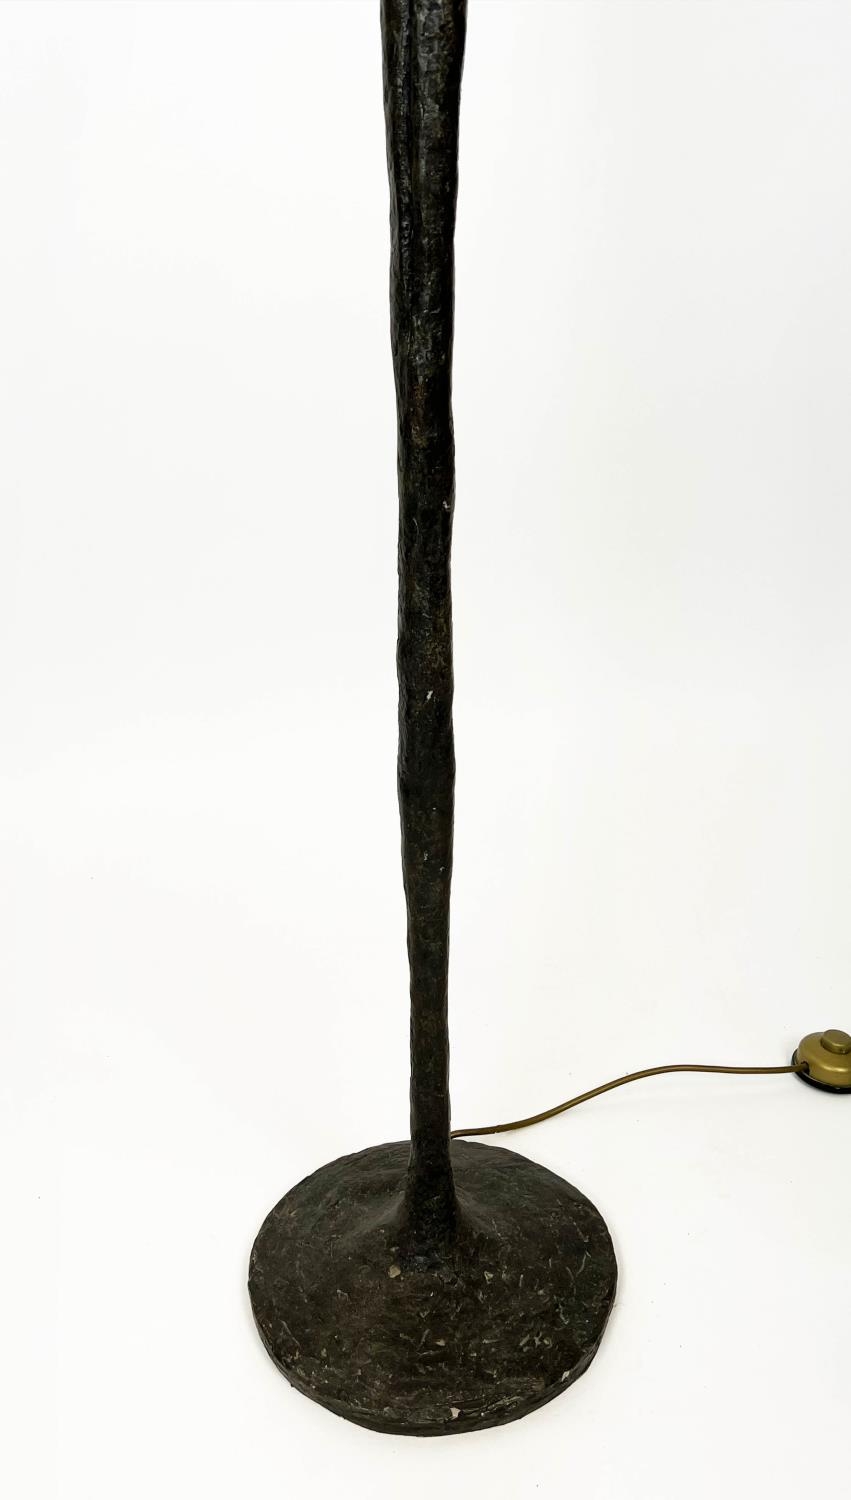 PORTA ROMANA FLOOR LAMP, 169cm H, with shade. - Image 3 of 5